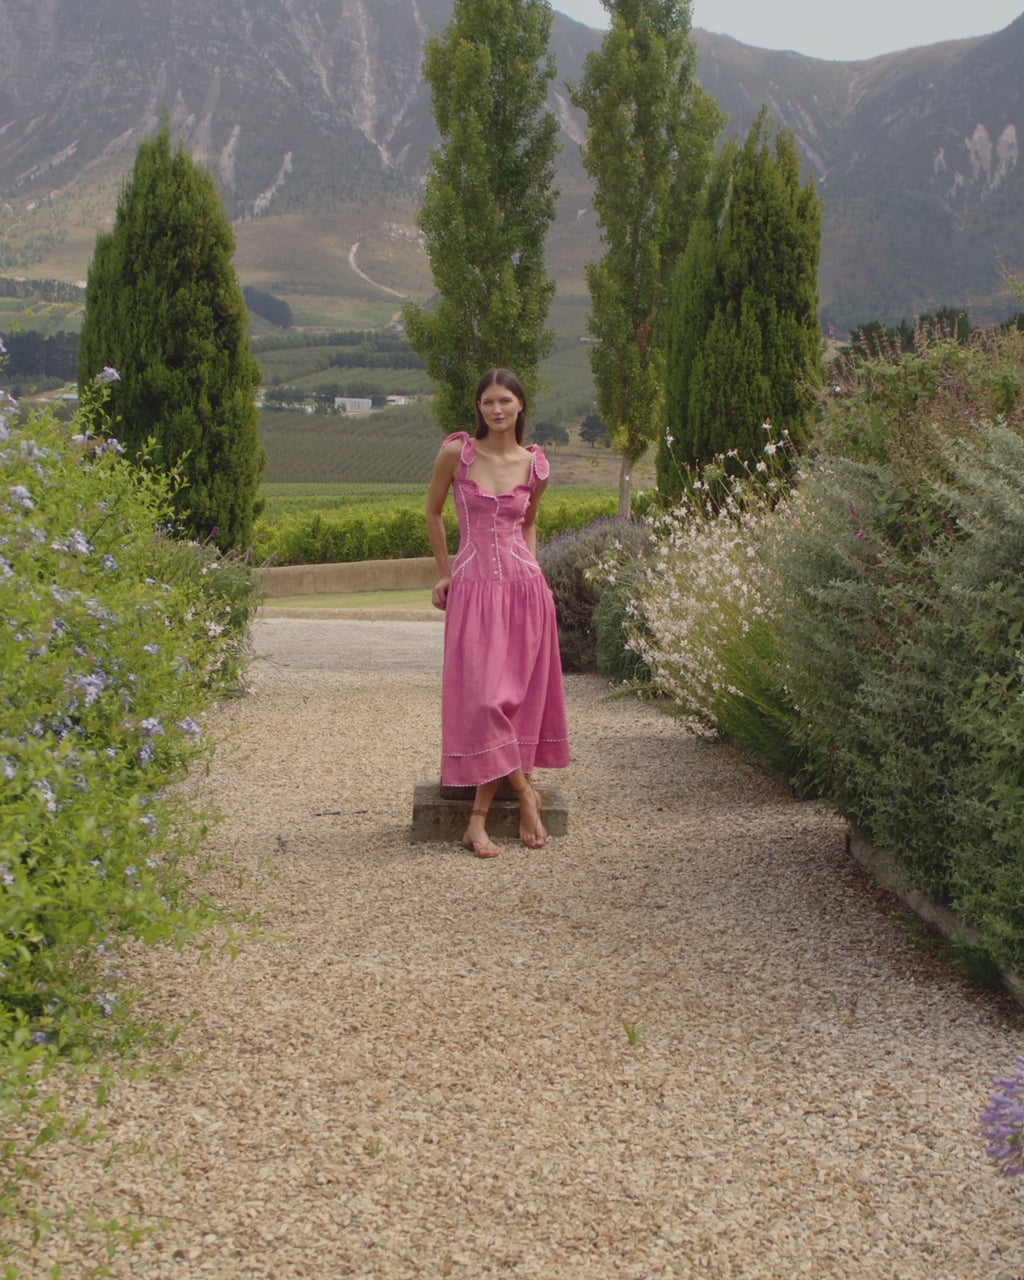 Wiggy Kit | Eden Dress (Pink) | Model wearing midi length pink dress with white trims